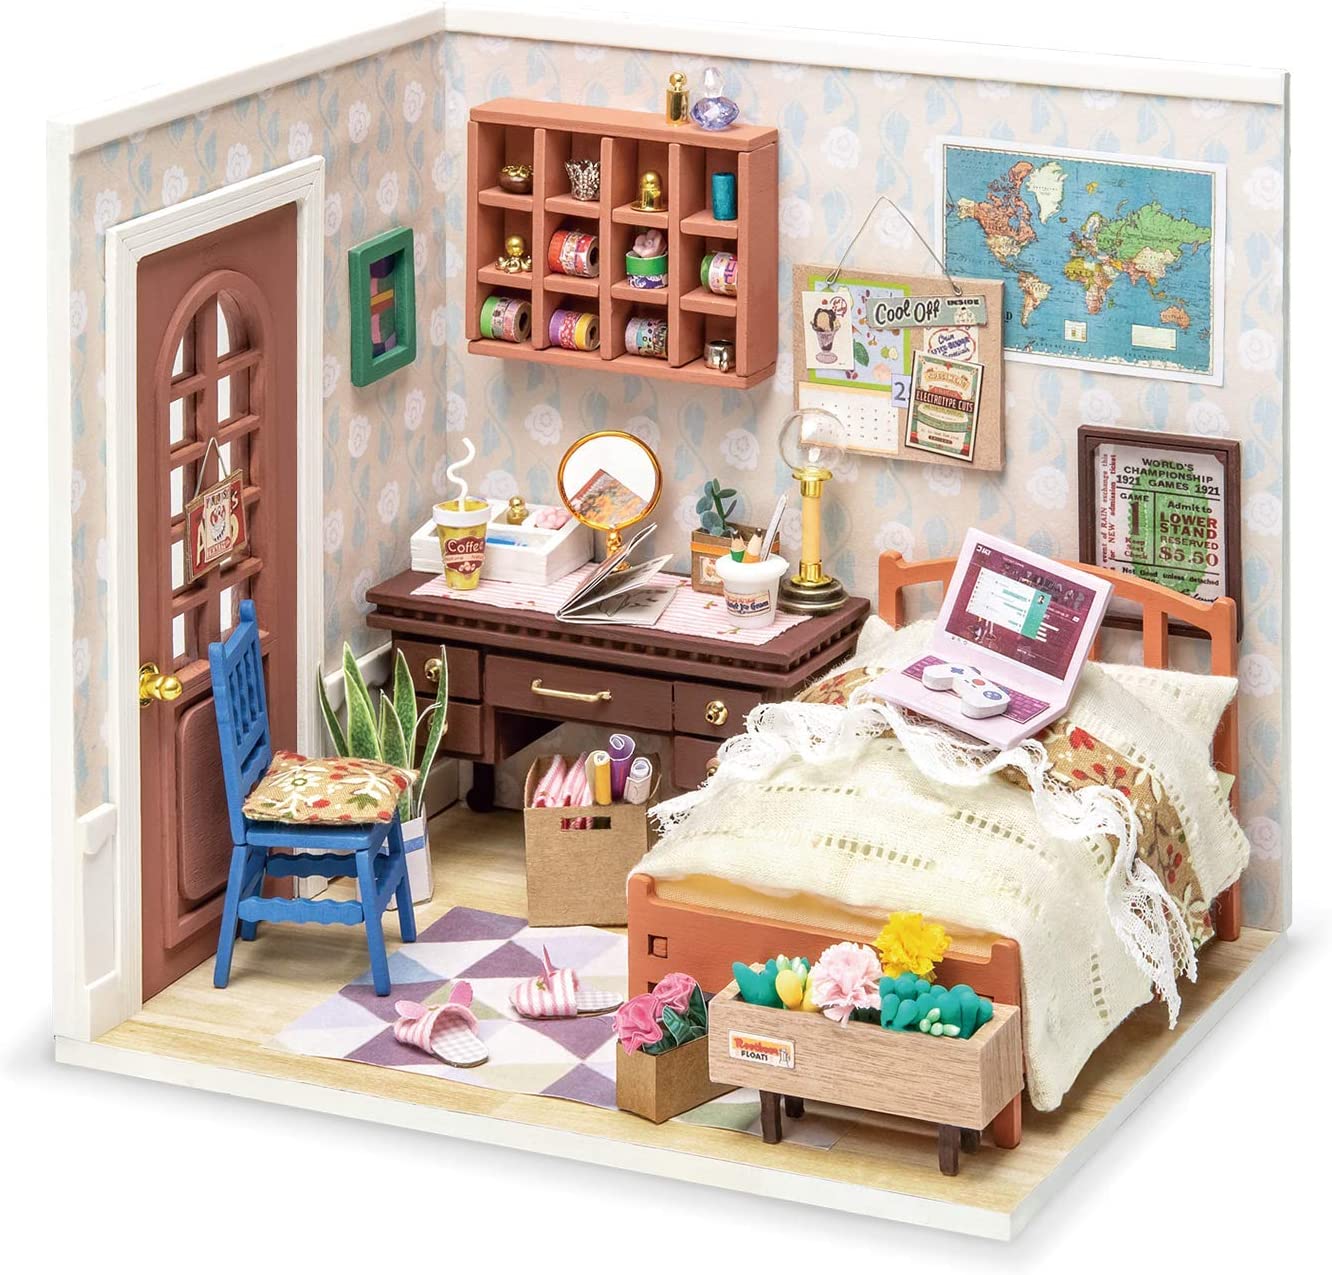 ROBOTIME Miniature Dollhouse DIY House Craft Kit (Various Styles) $12.90 + Free Shipping